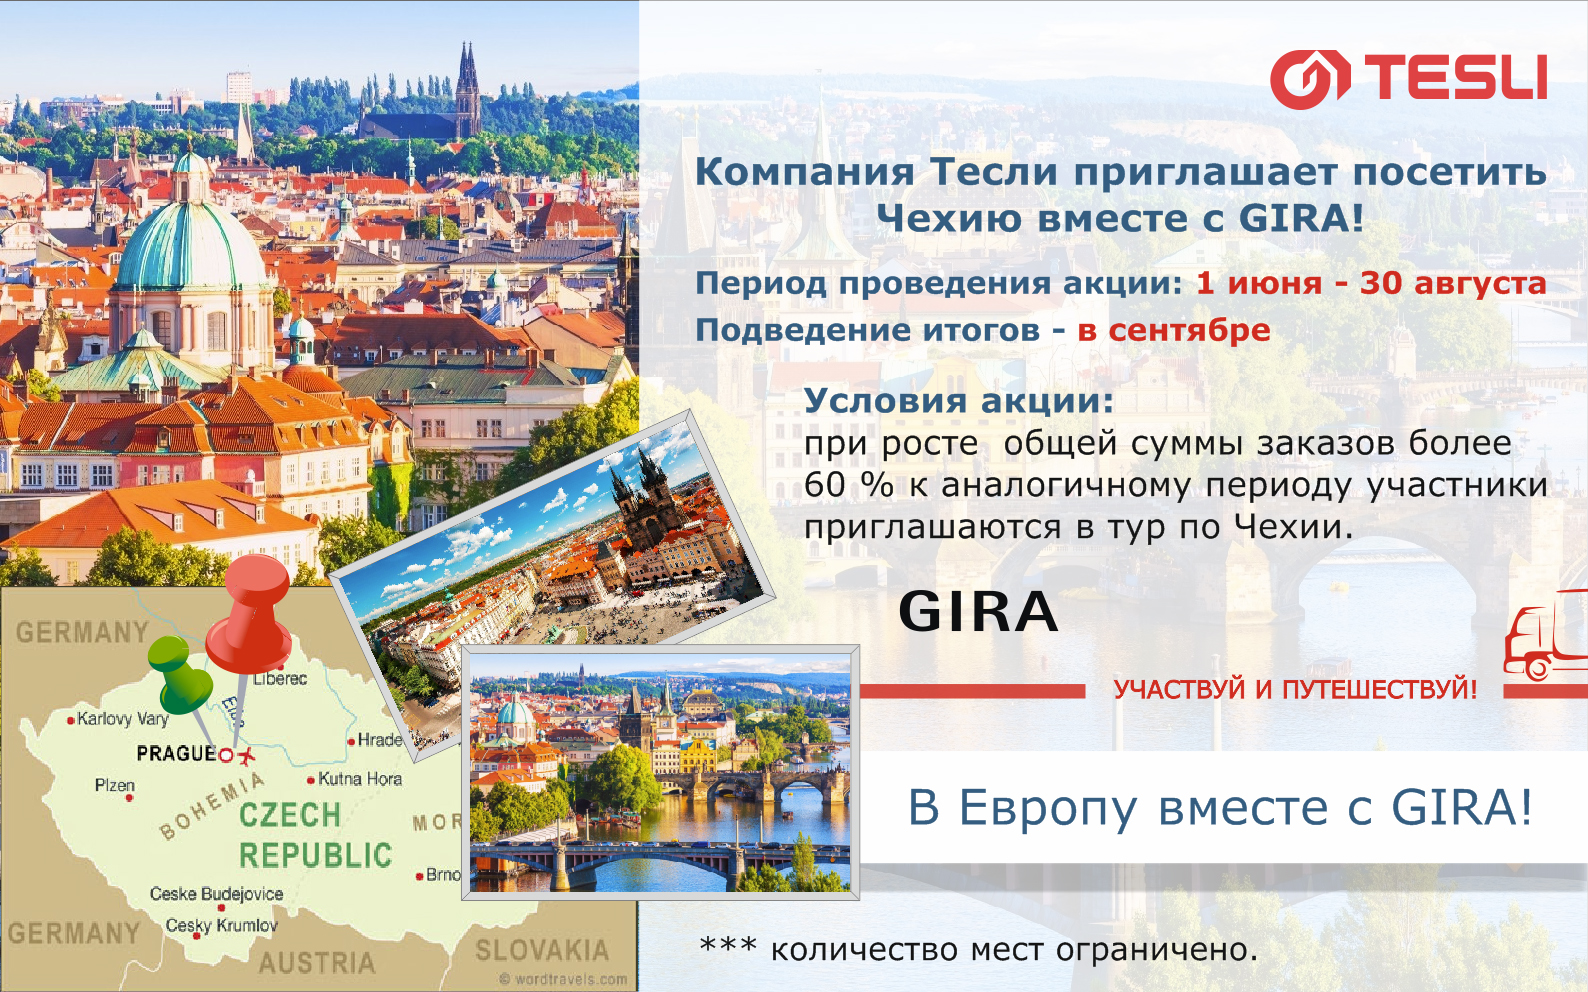 Конкурс в Европу вместе с GIRA